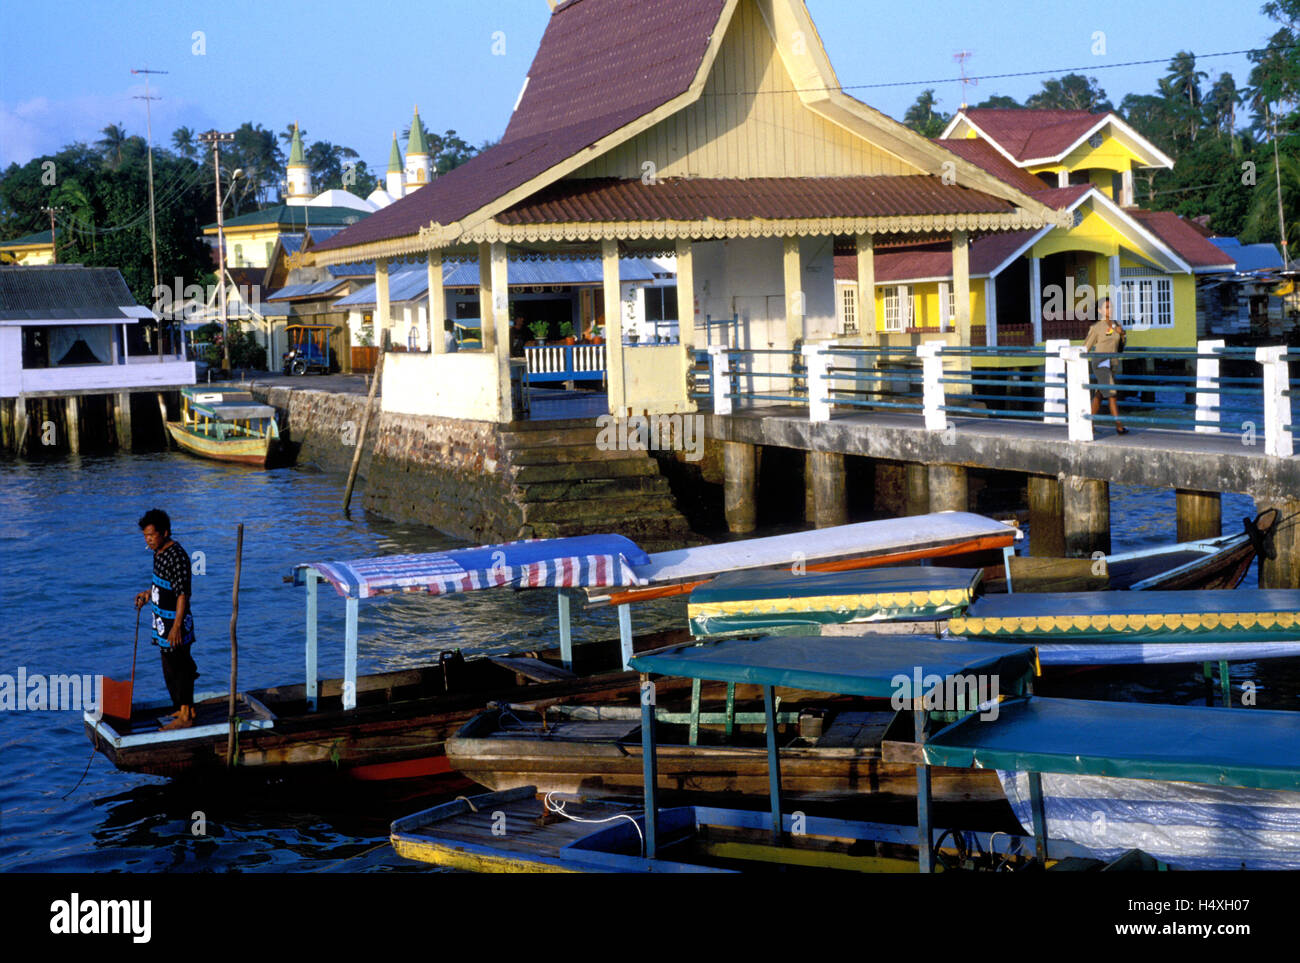 Indonesia Bintan ferry port harbour scene penyenget Stock Photo